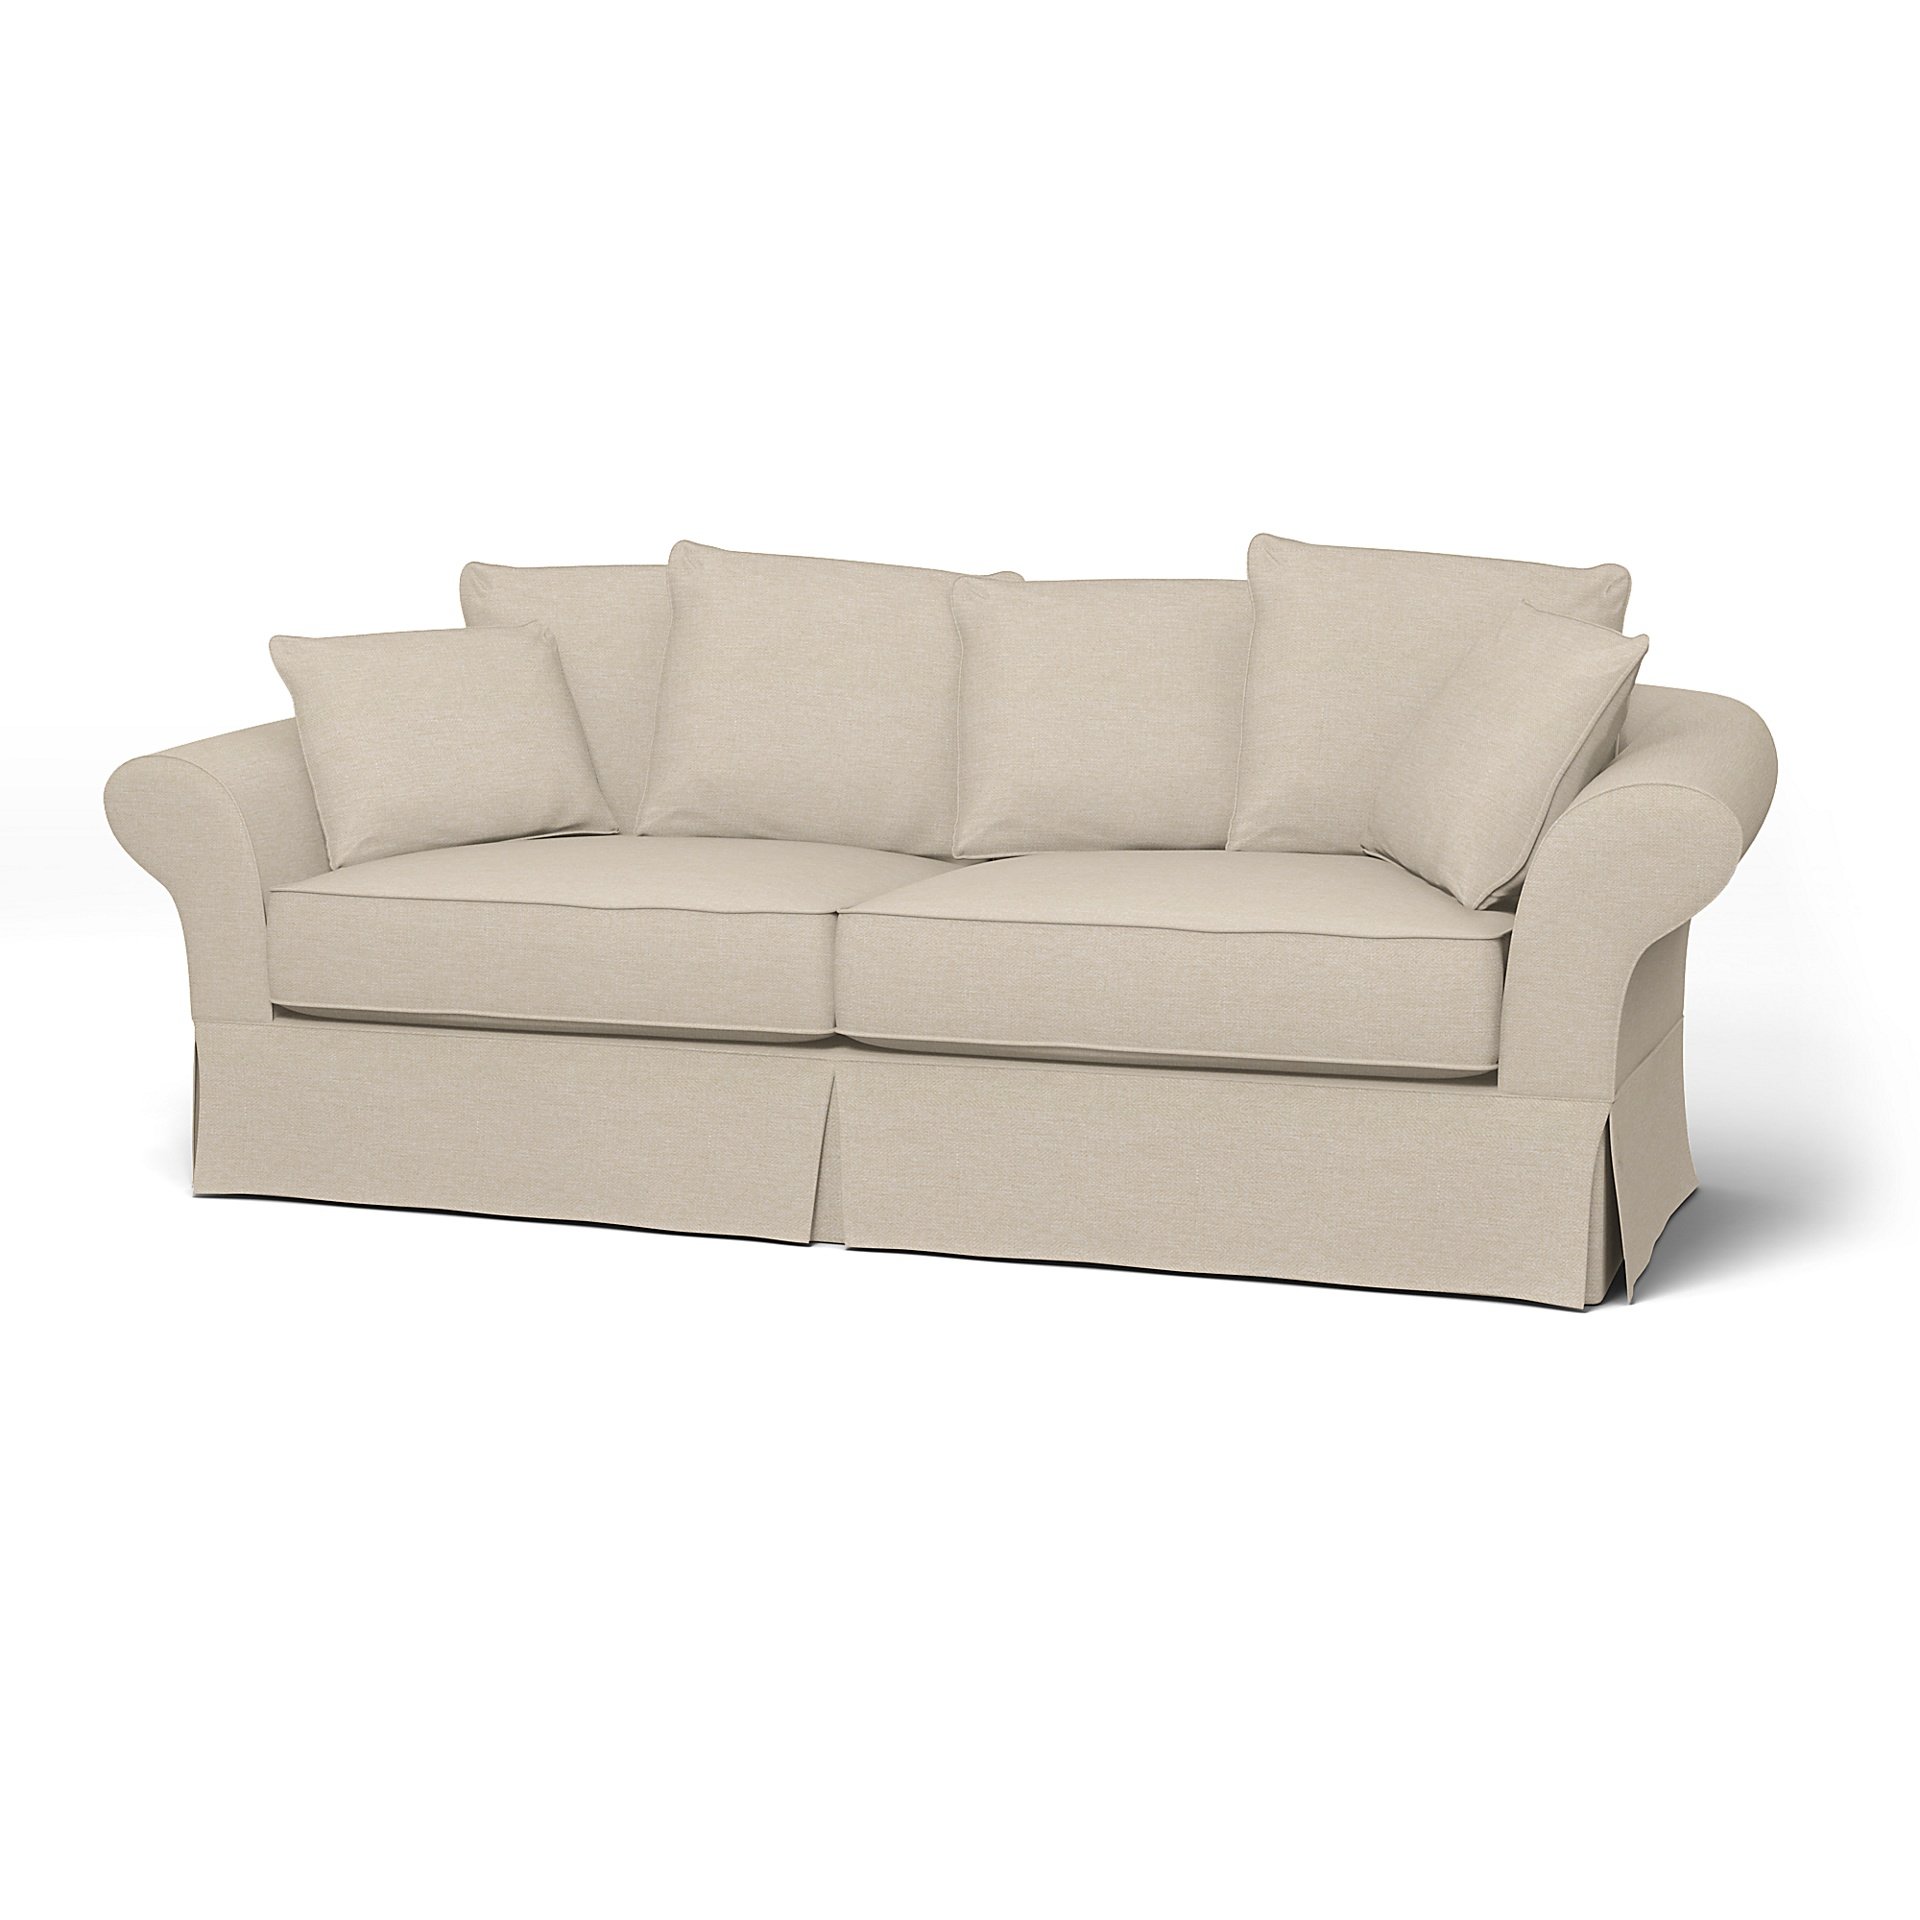 IKEA - Backamo 3 Seater Sofa Cover, Natural, Boucle & Texture - Bemz